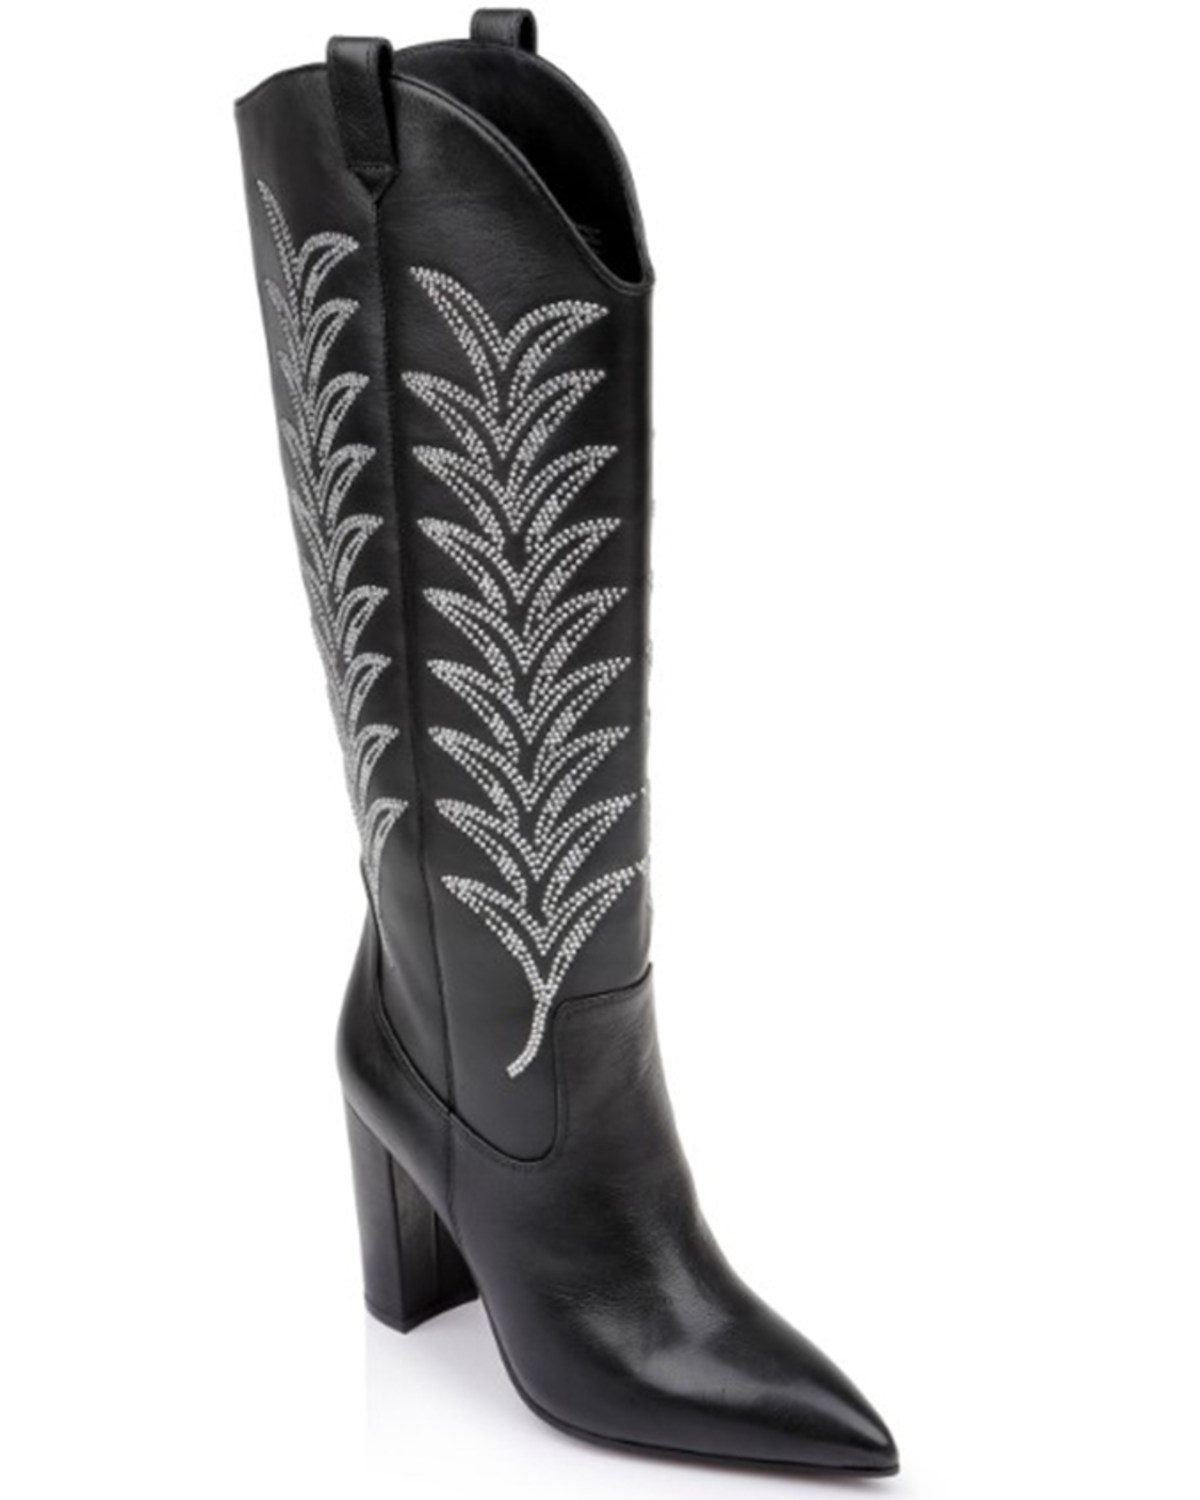 Daniel X Diamond Women's The Tall T Leather Western Boots